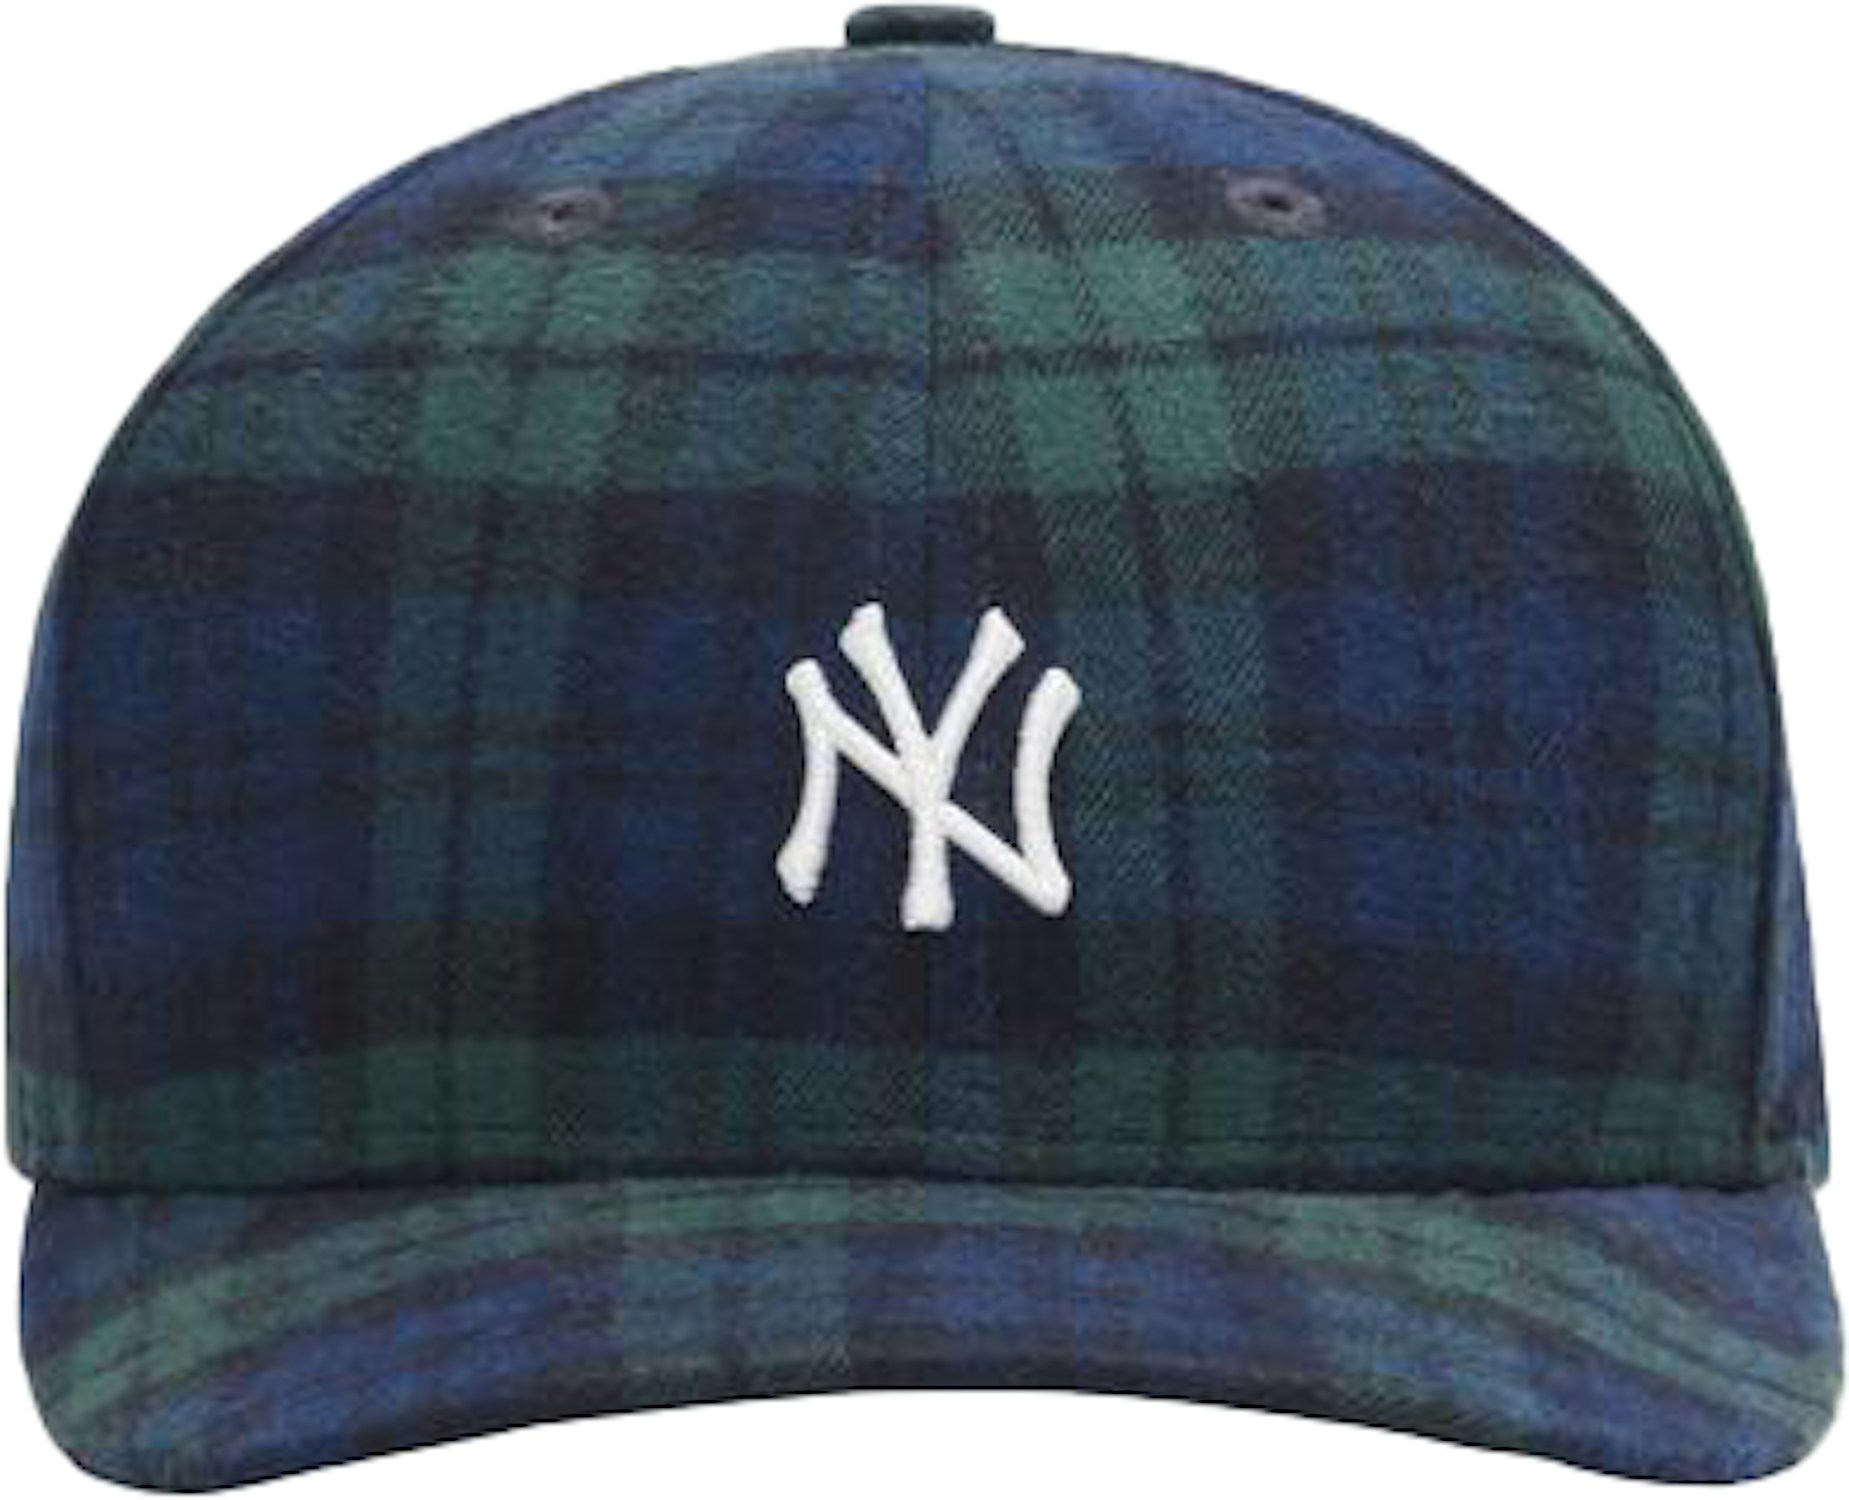 Kith x New York Yankees Plaid New Era Cap Blackwatch - FW20